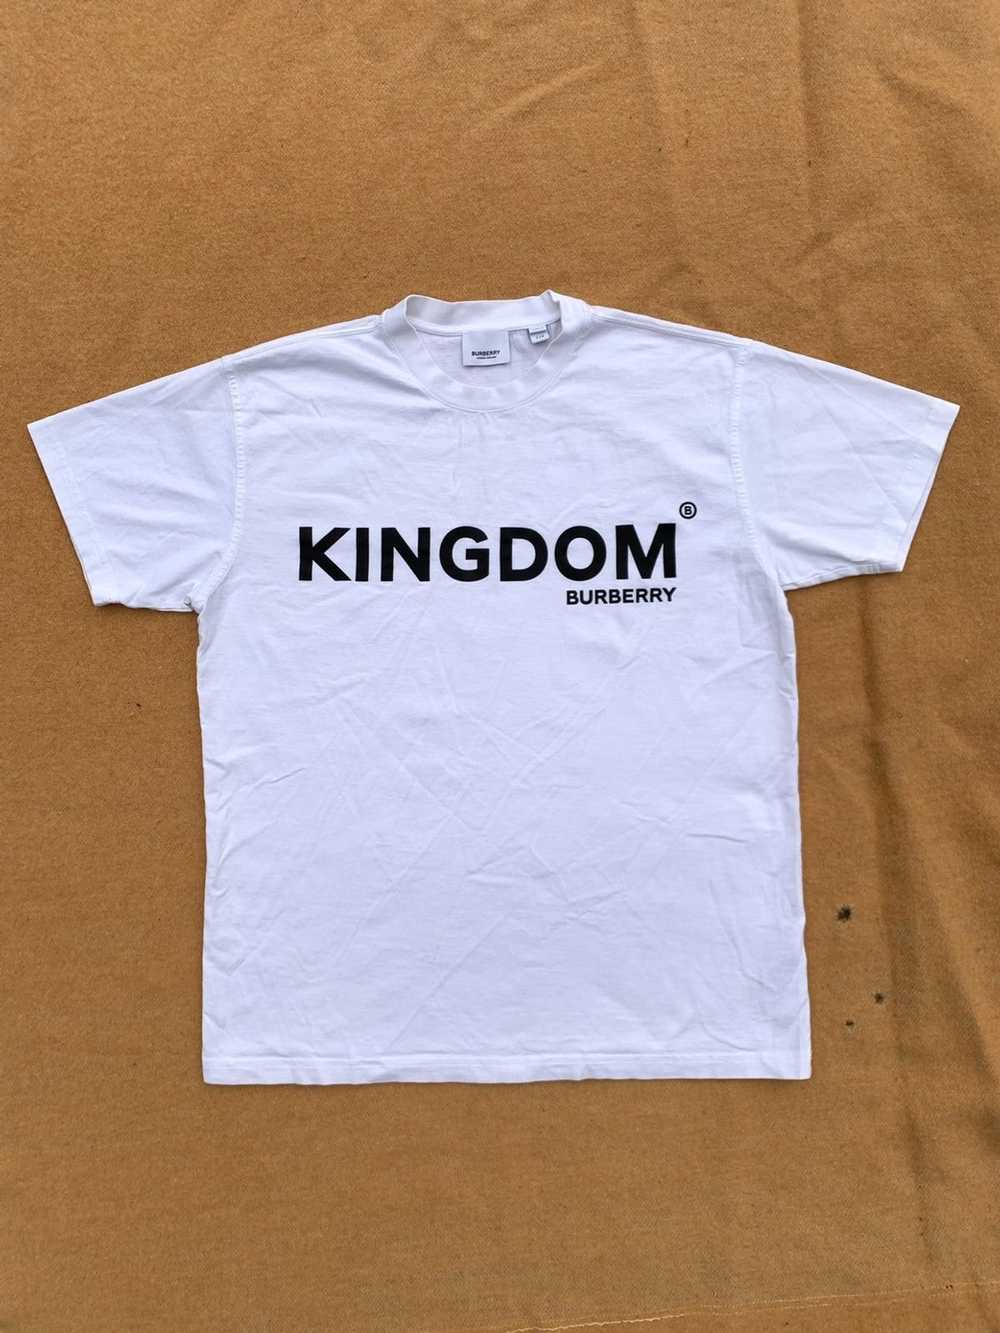 Burberry Kingdom T Shirt - image 1